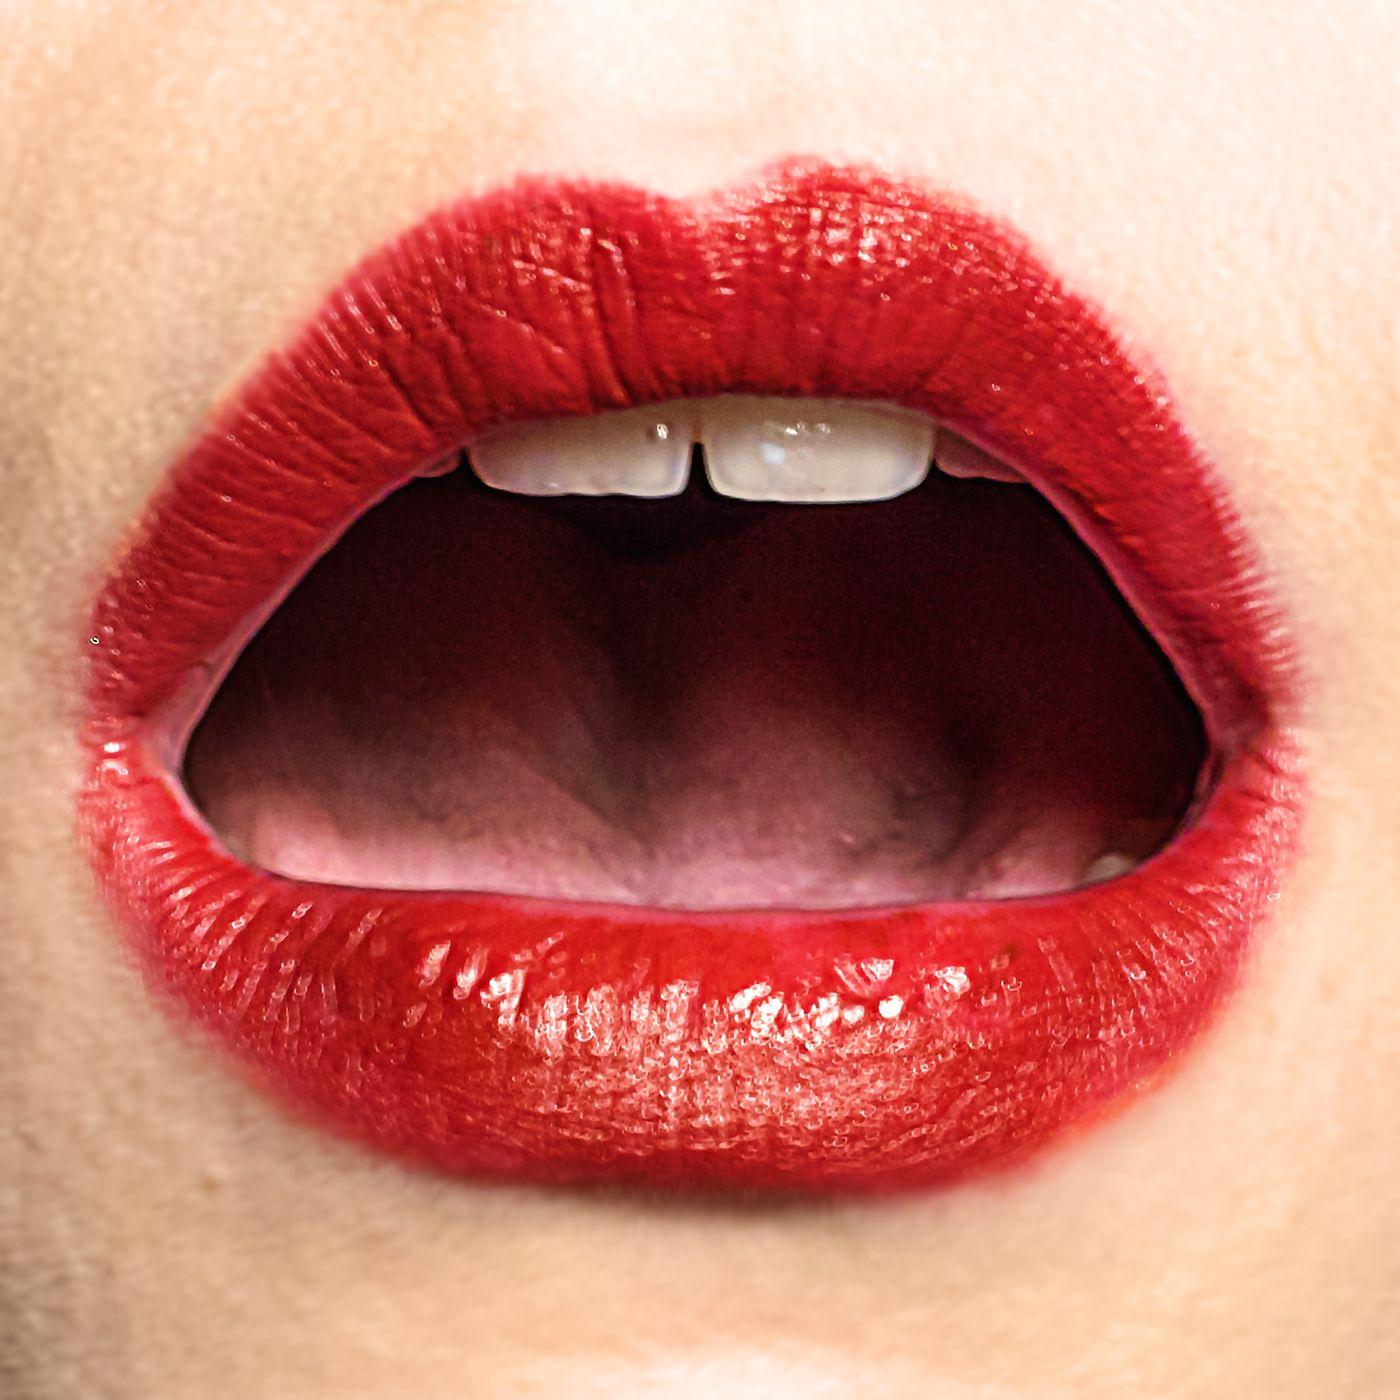 Red Lips and Tongue Logo - Red Lips Pink Tongue